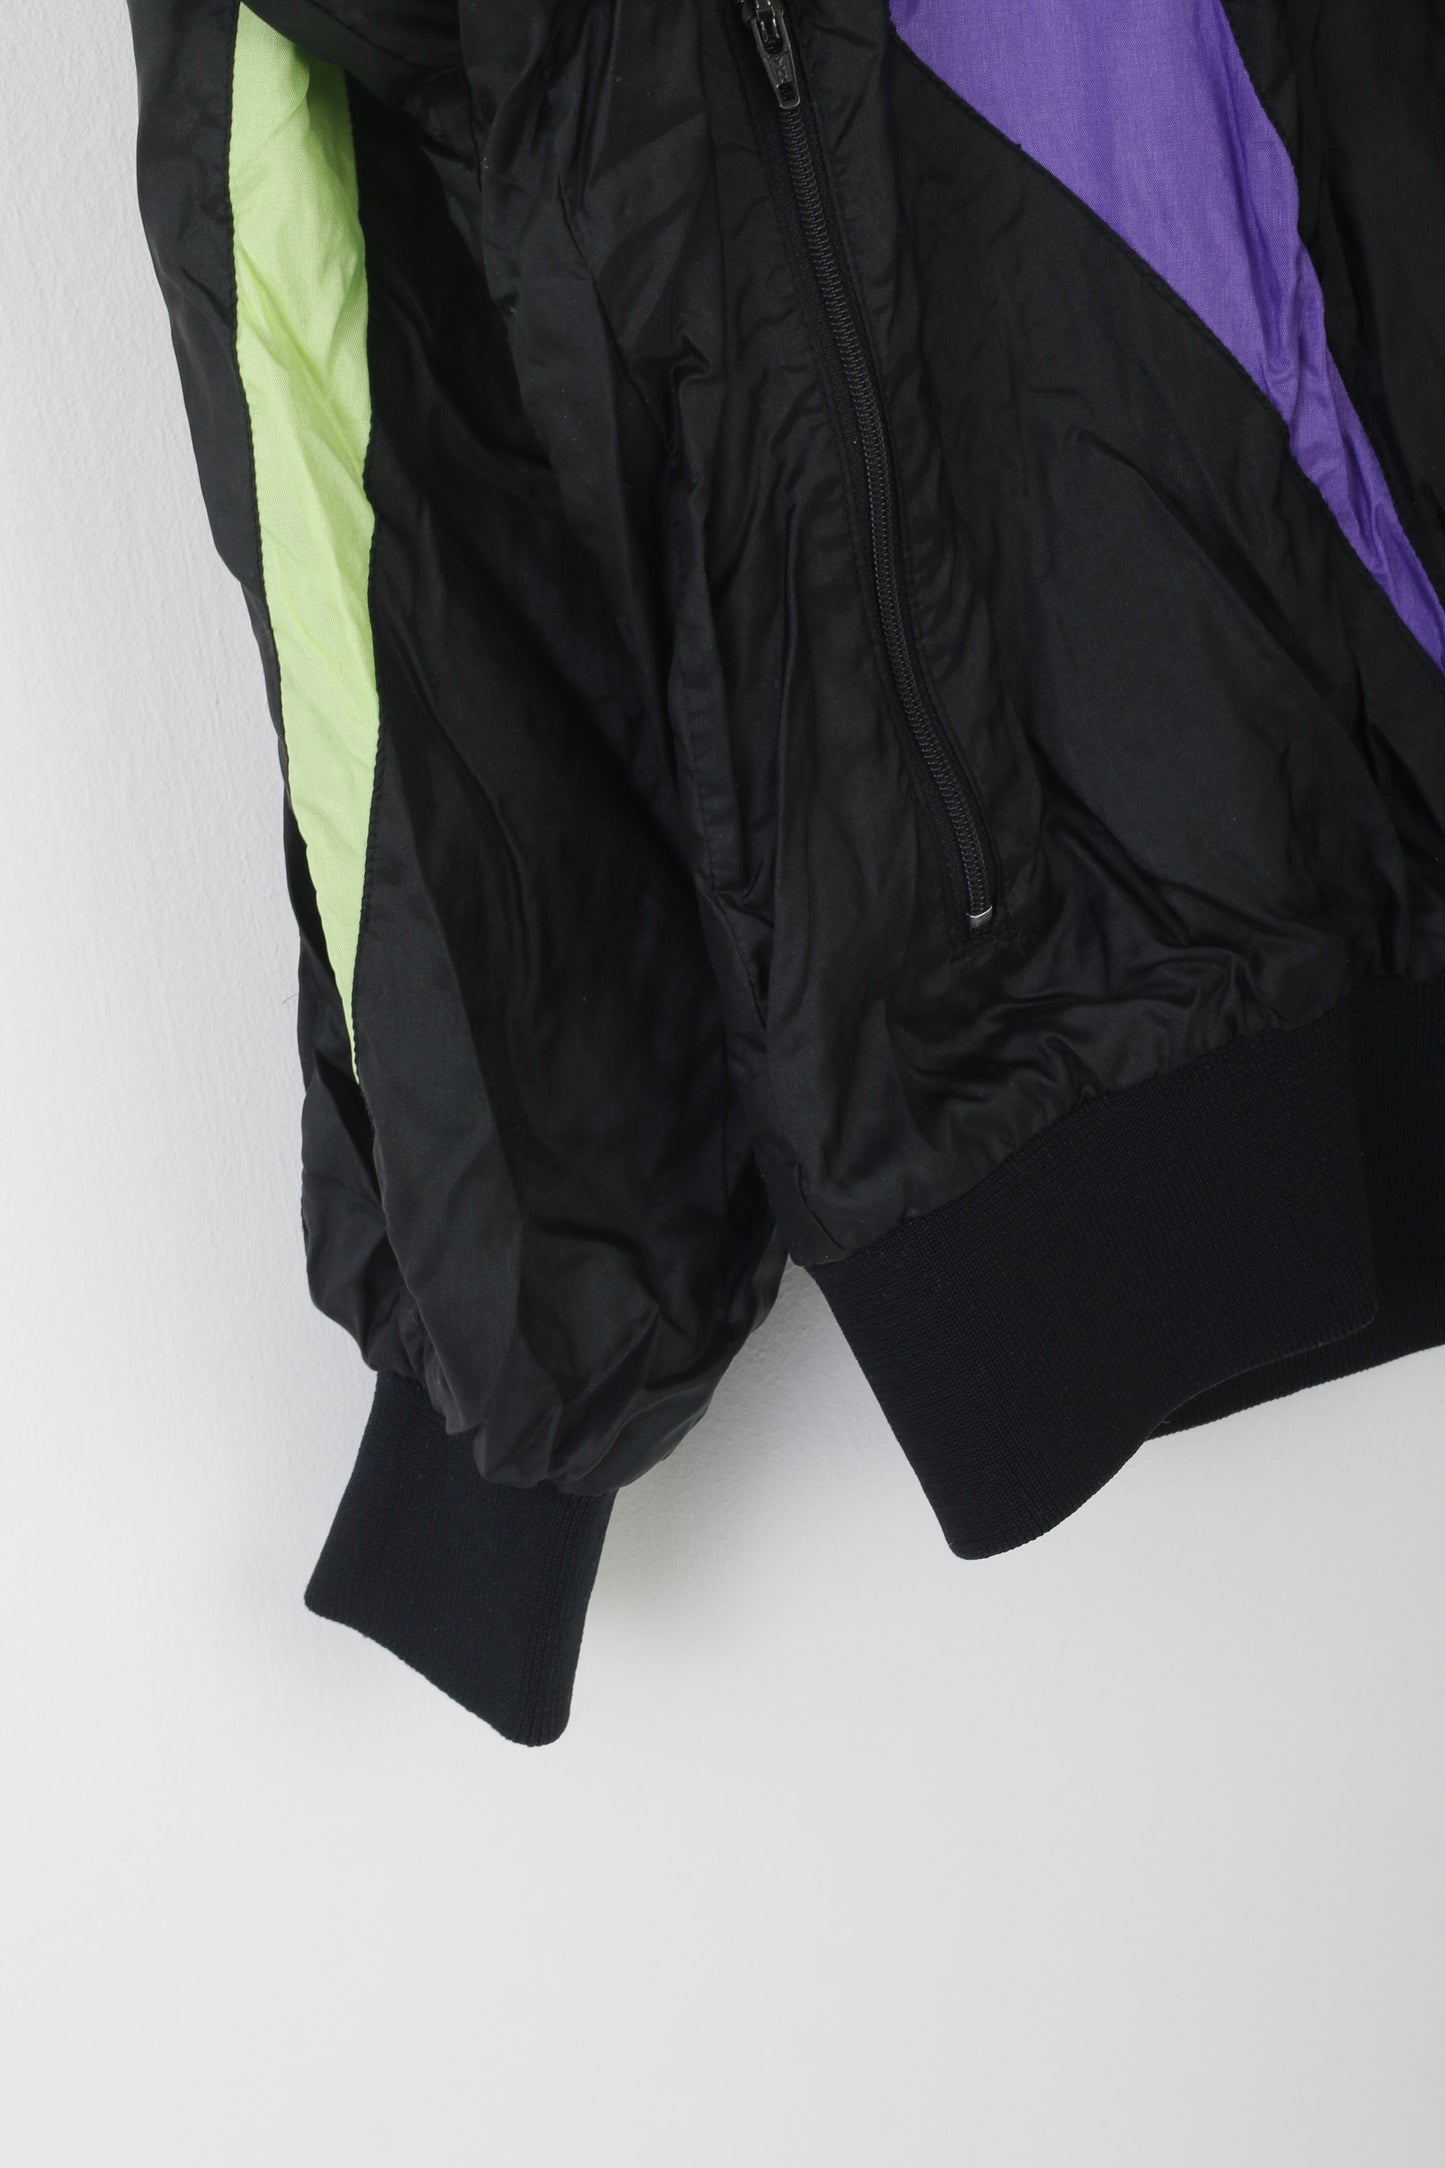 Frank Shorter Women M Jacket Black Nylon Shiny Vintage Zip Up Sportswear Top